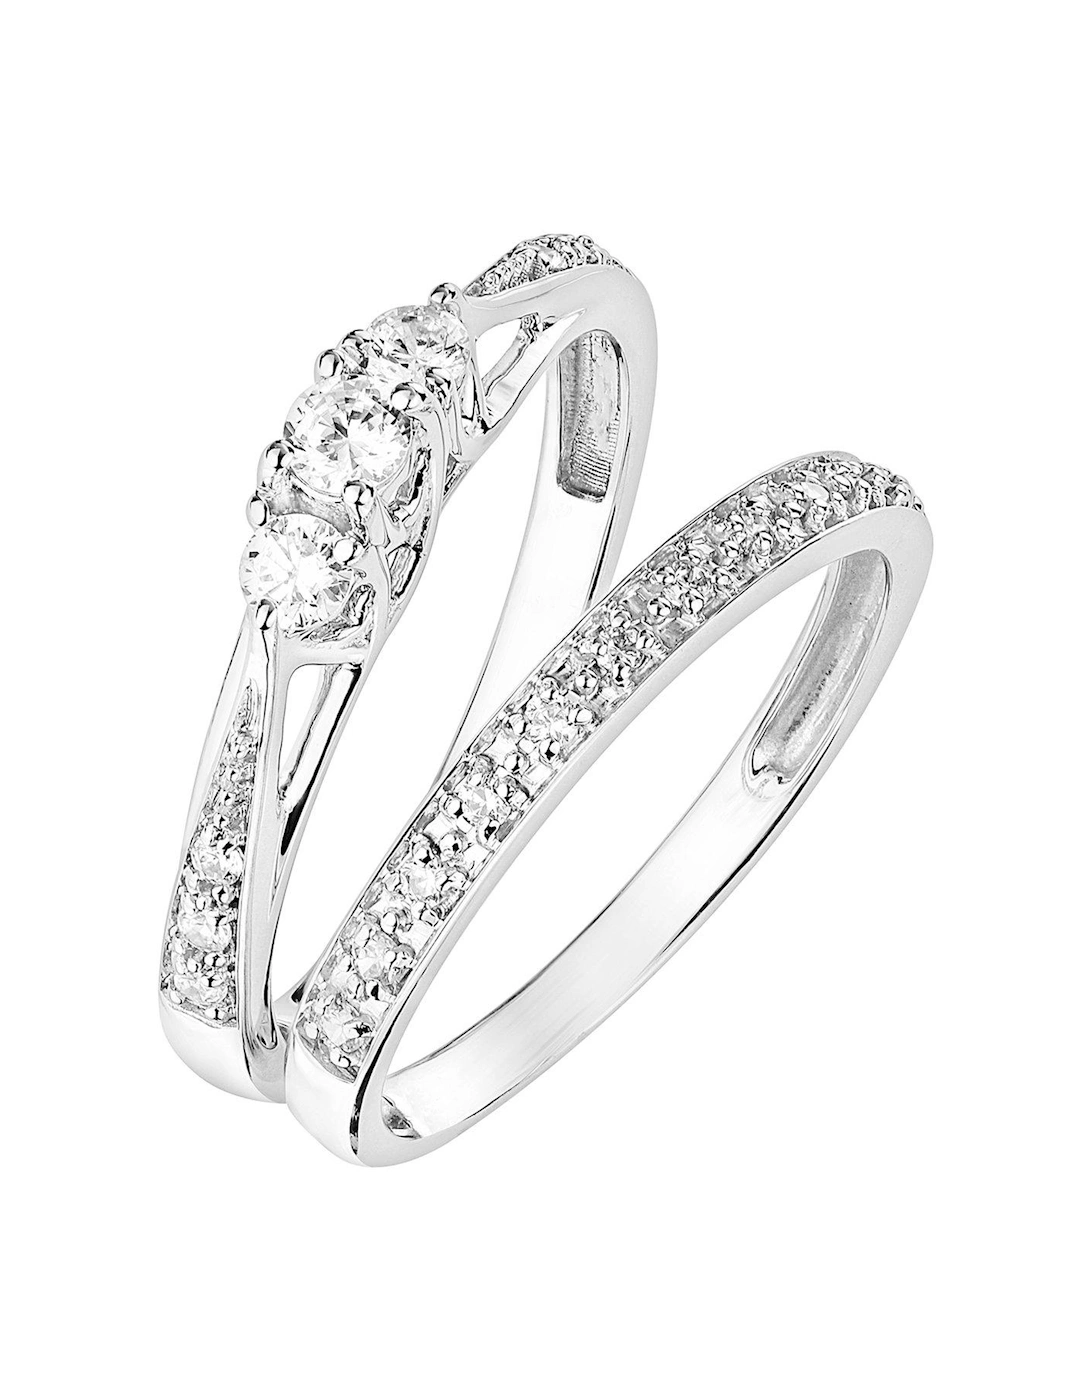 9ct White Gold 0.23ct Three-Stone Diamond Ring and 9ct White Gold 0.07ct Wedding Band Bridal Set, 2 of 1